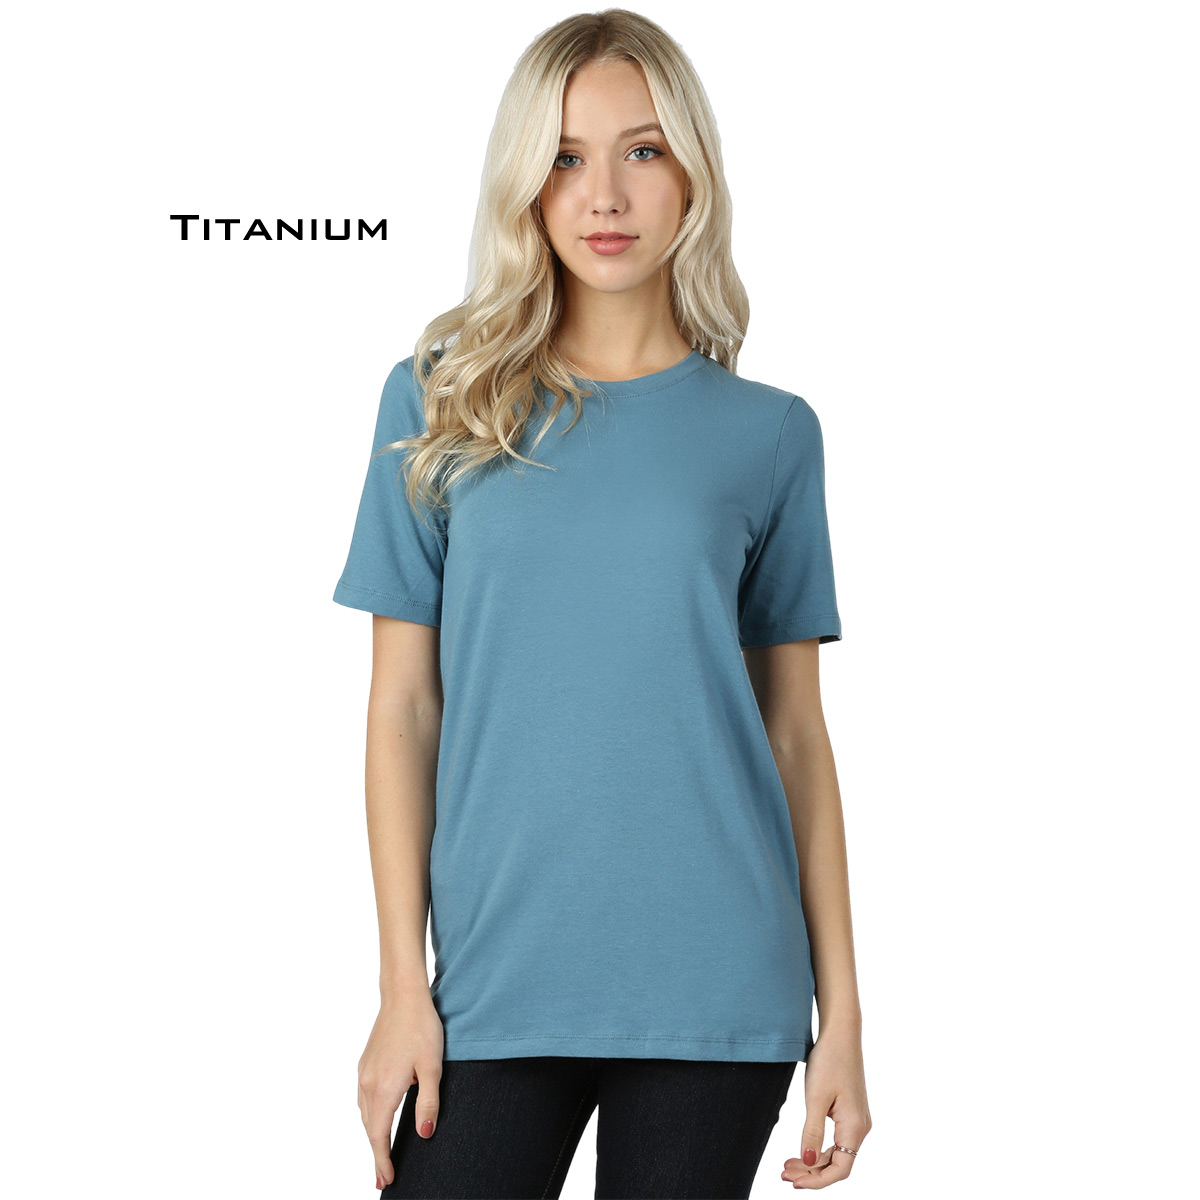 TITANIUM Crew Neck Short Sleeve T-Shirt 1008 